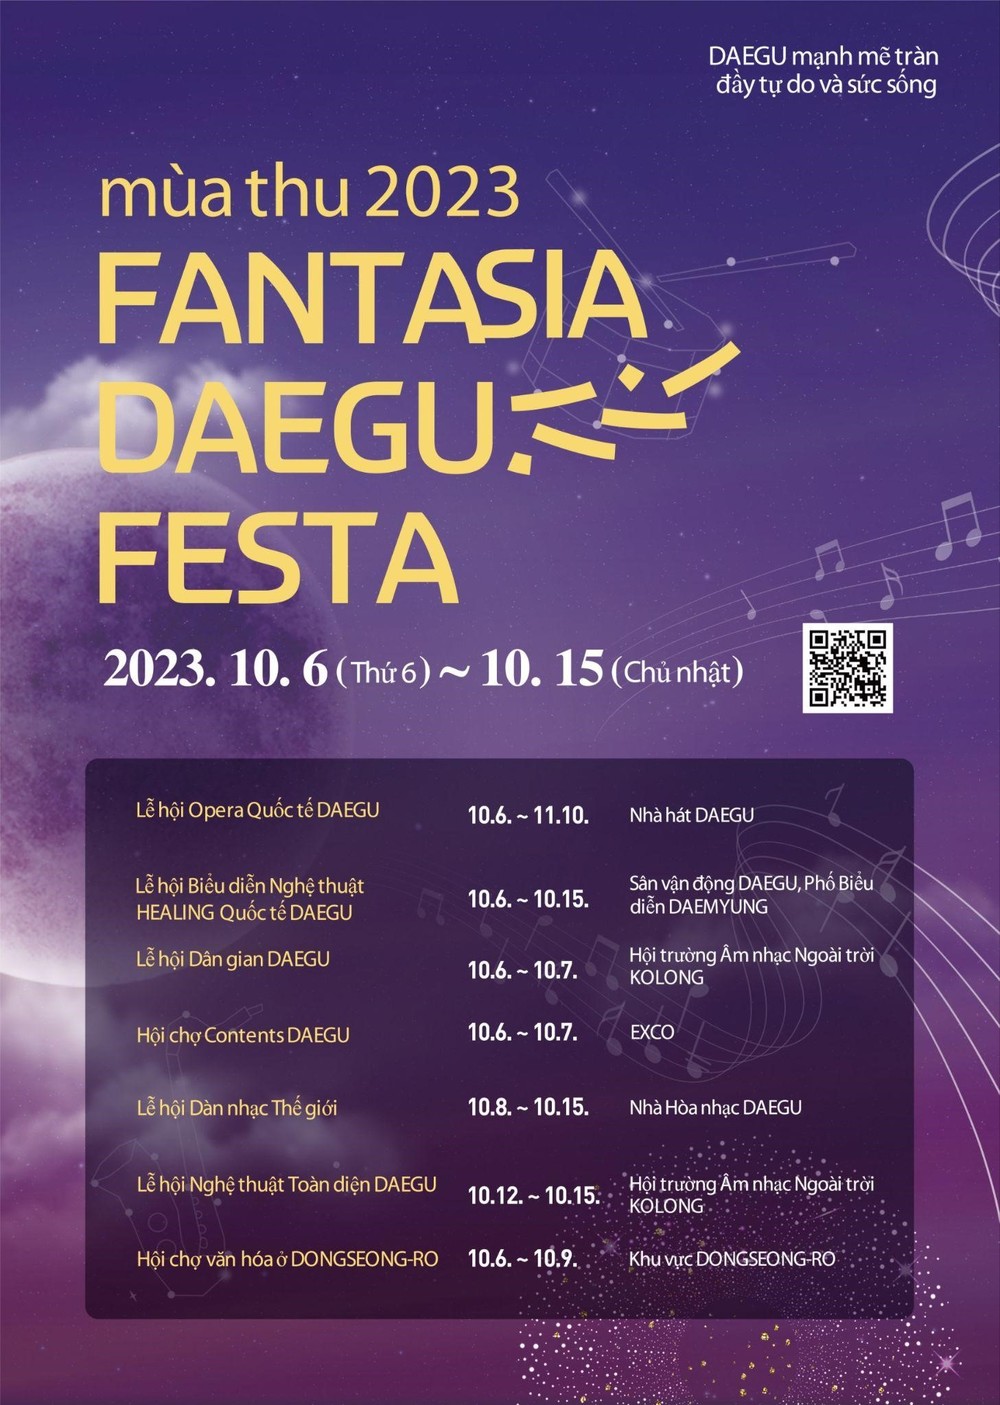 Vẻ đẹp của Daegu - Hàn Quốc trong Lễ hội FANTASIA DAEGU FESTA 2023 - Ảnh 2.